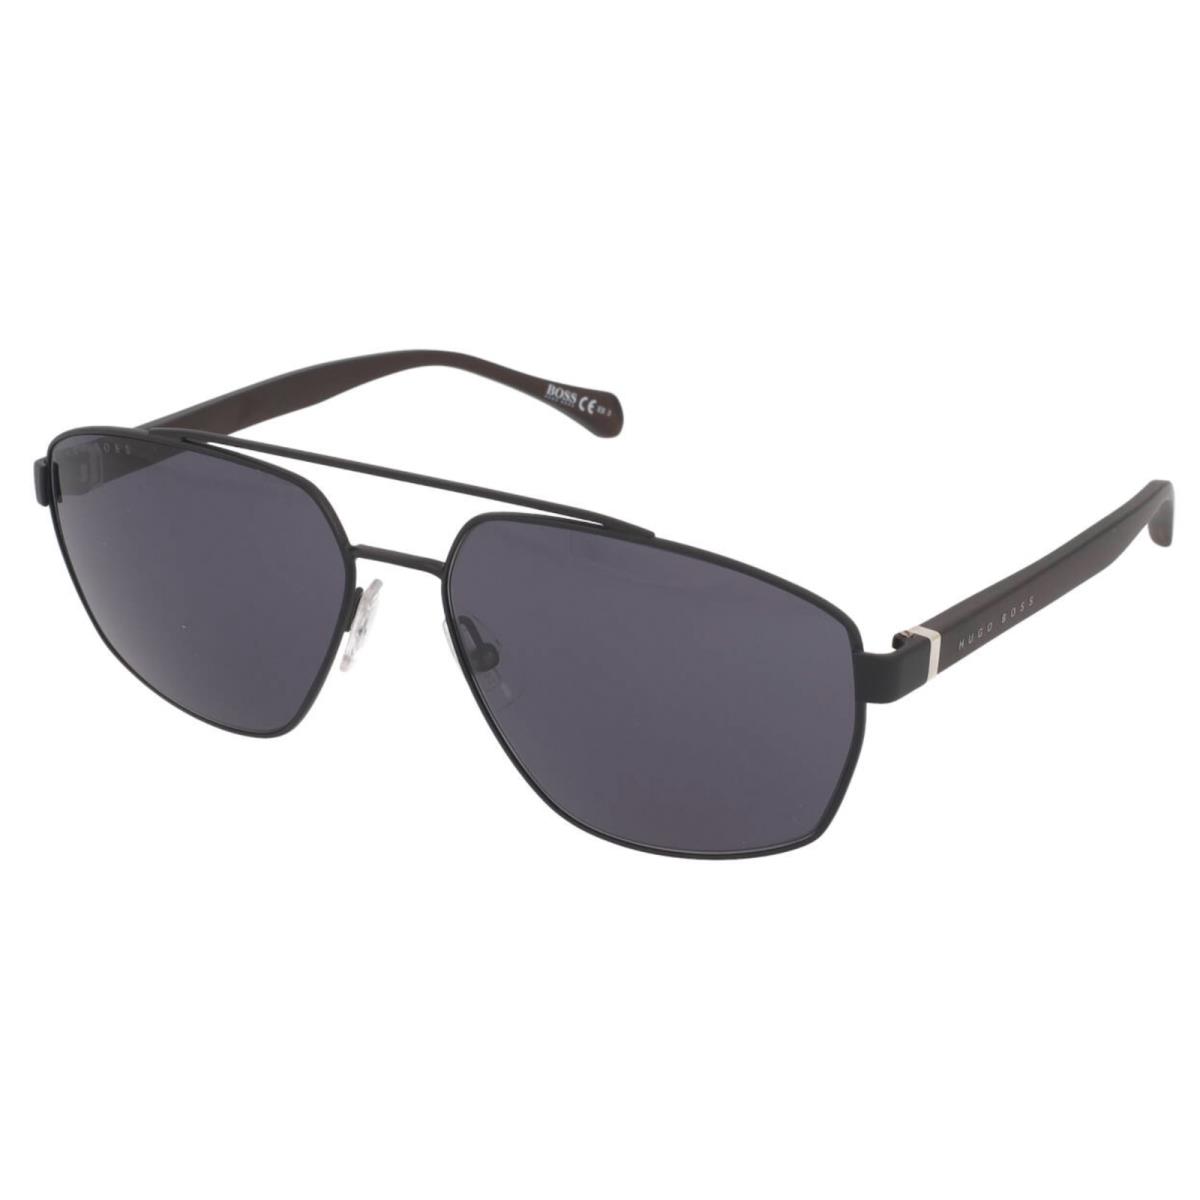 Hugo Boss Square Matt Black Sunglasses 1118/S003IR - Black Frame, Gray Lens